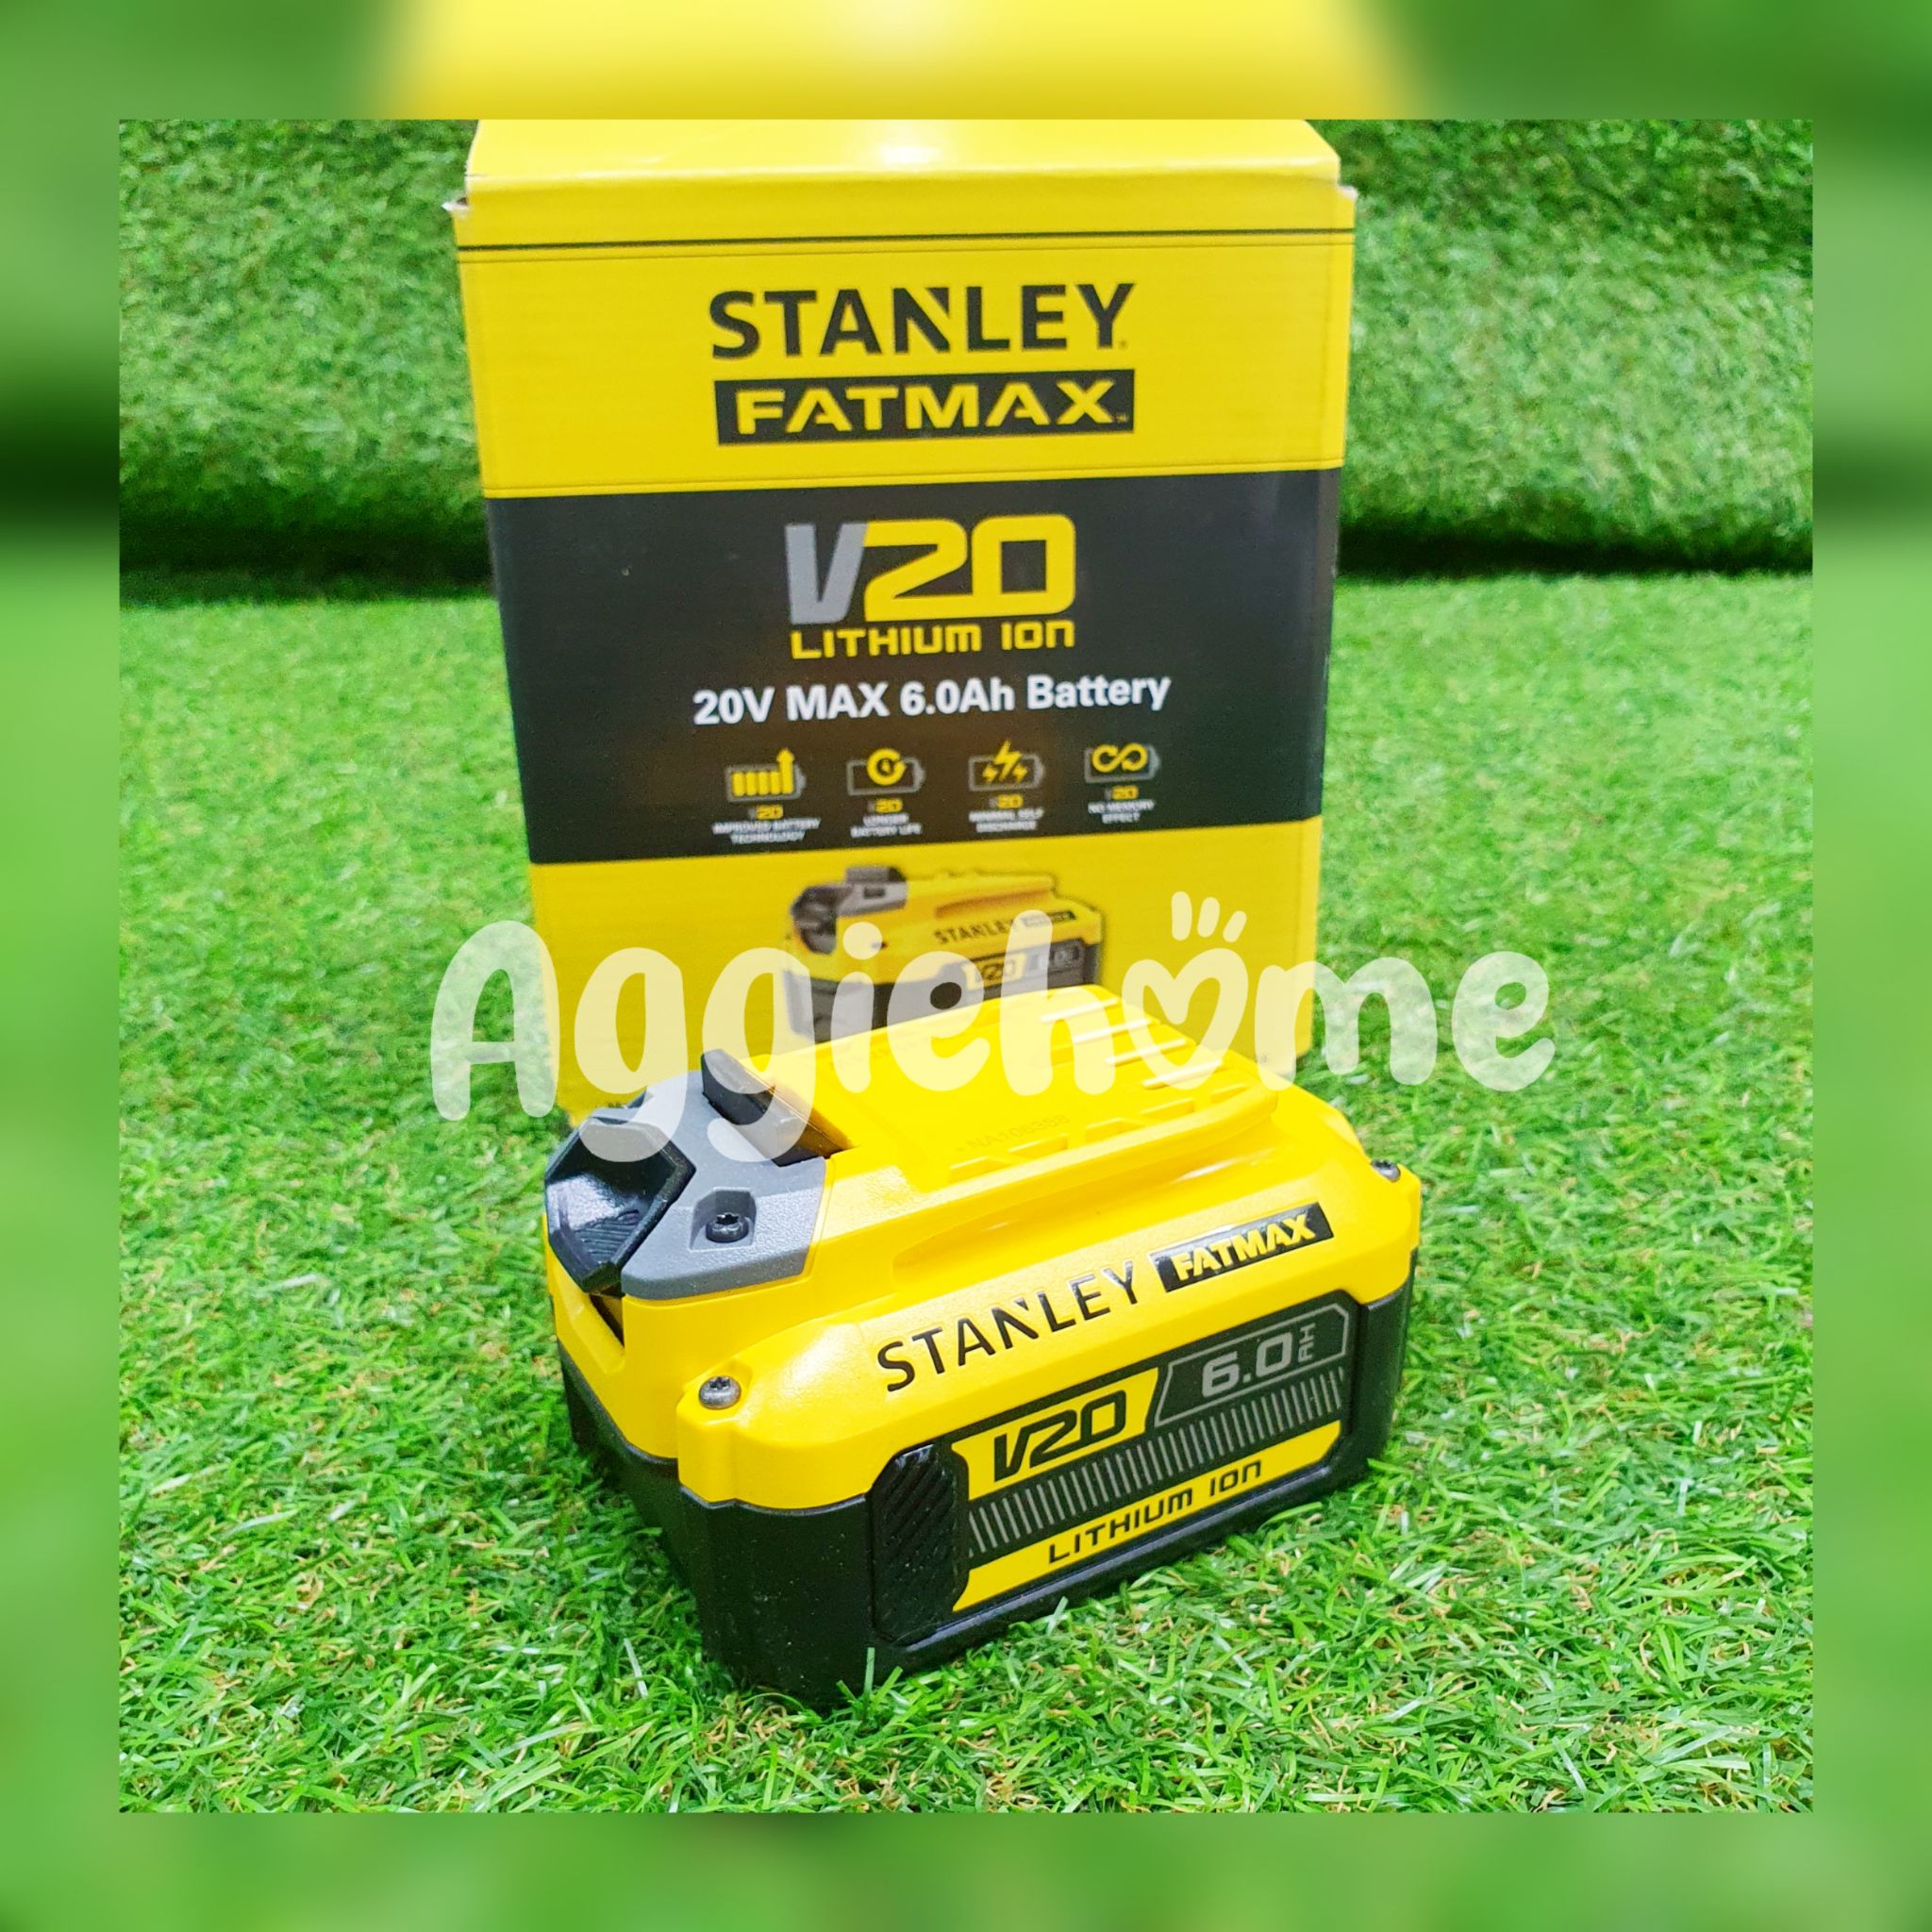 18V STANLEY® FATMAX® V20 6.0Ah Lithium Ion Battery